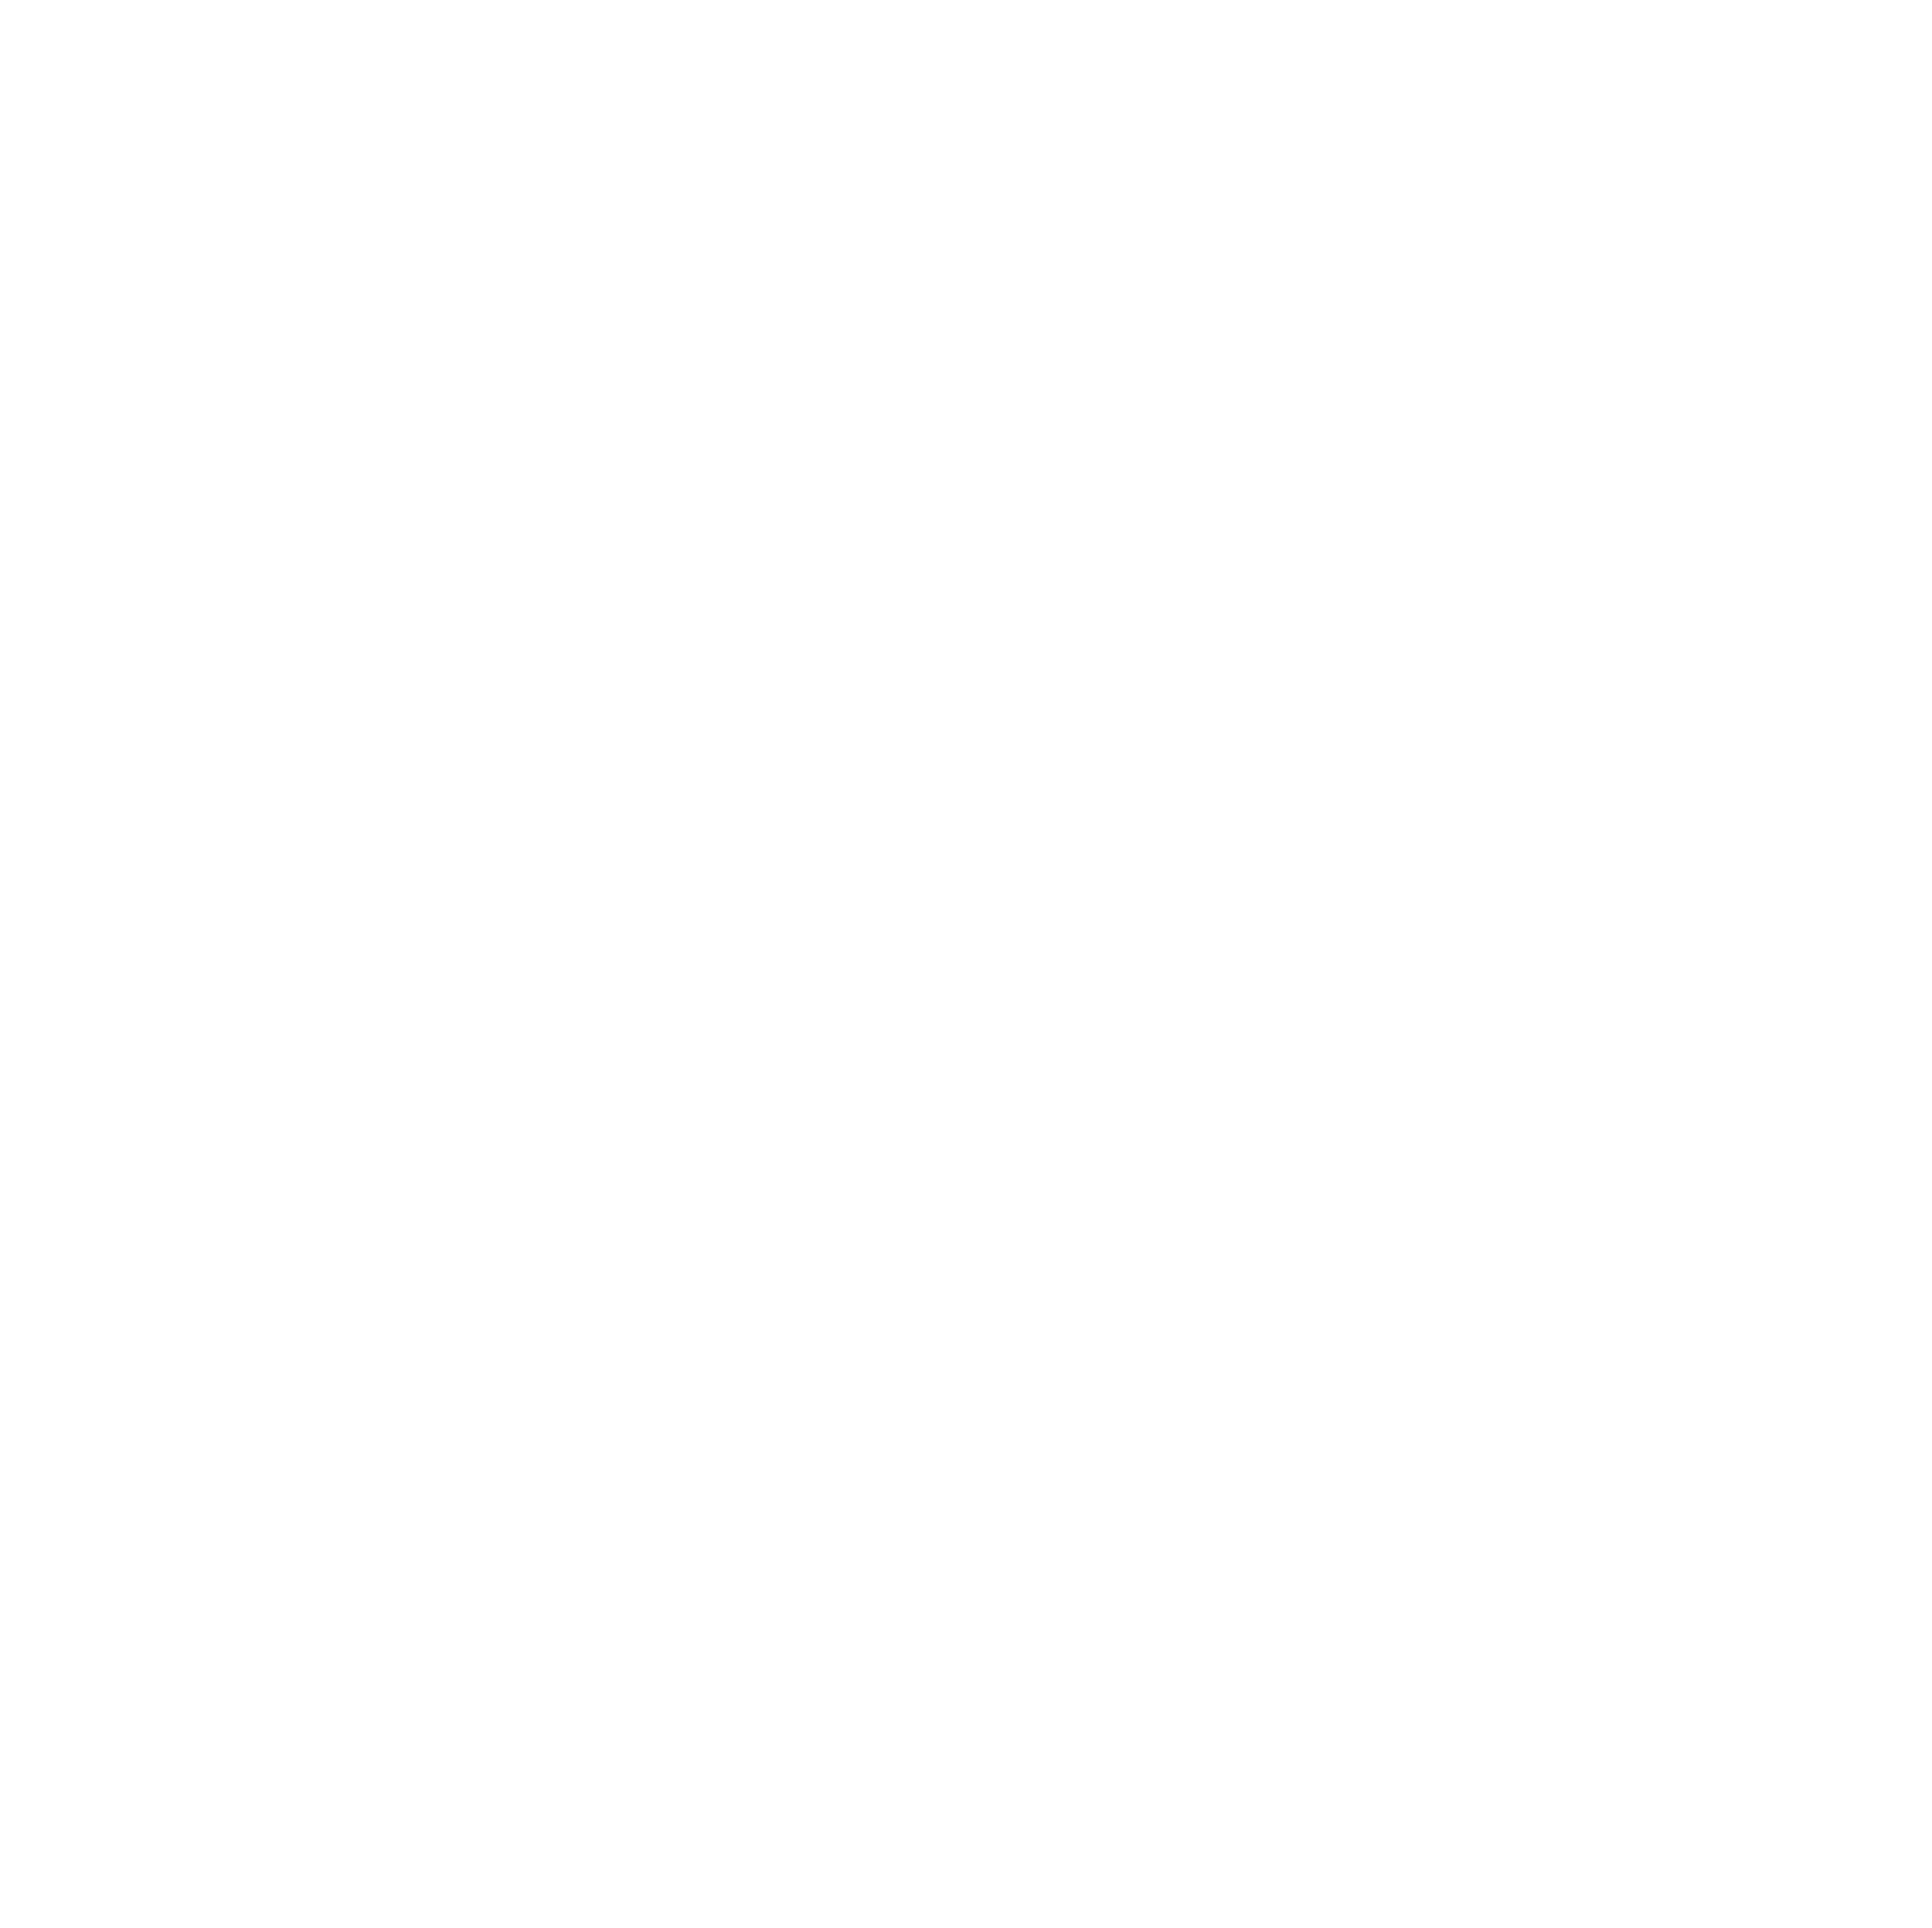 ostrich egg media